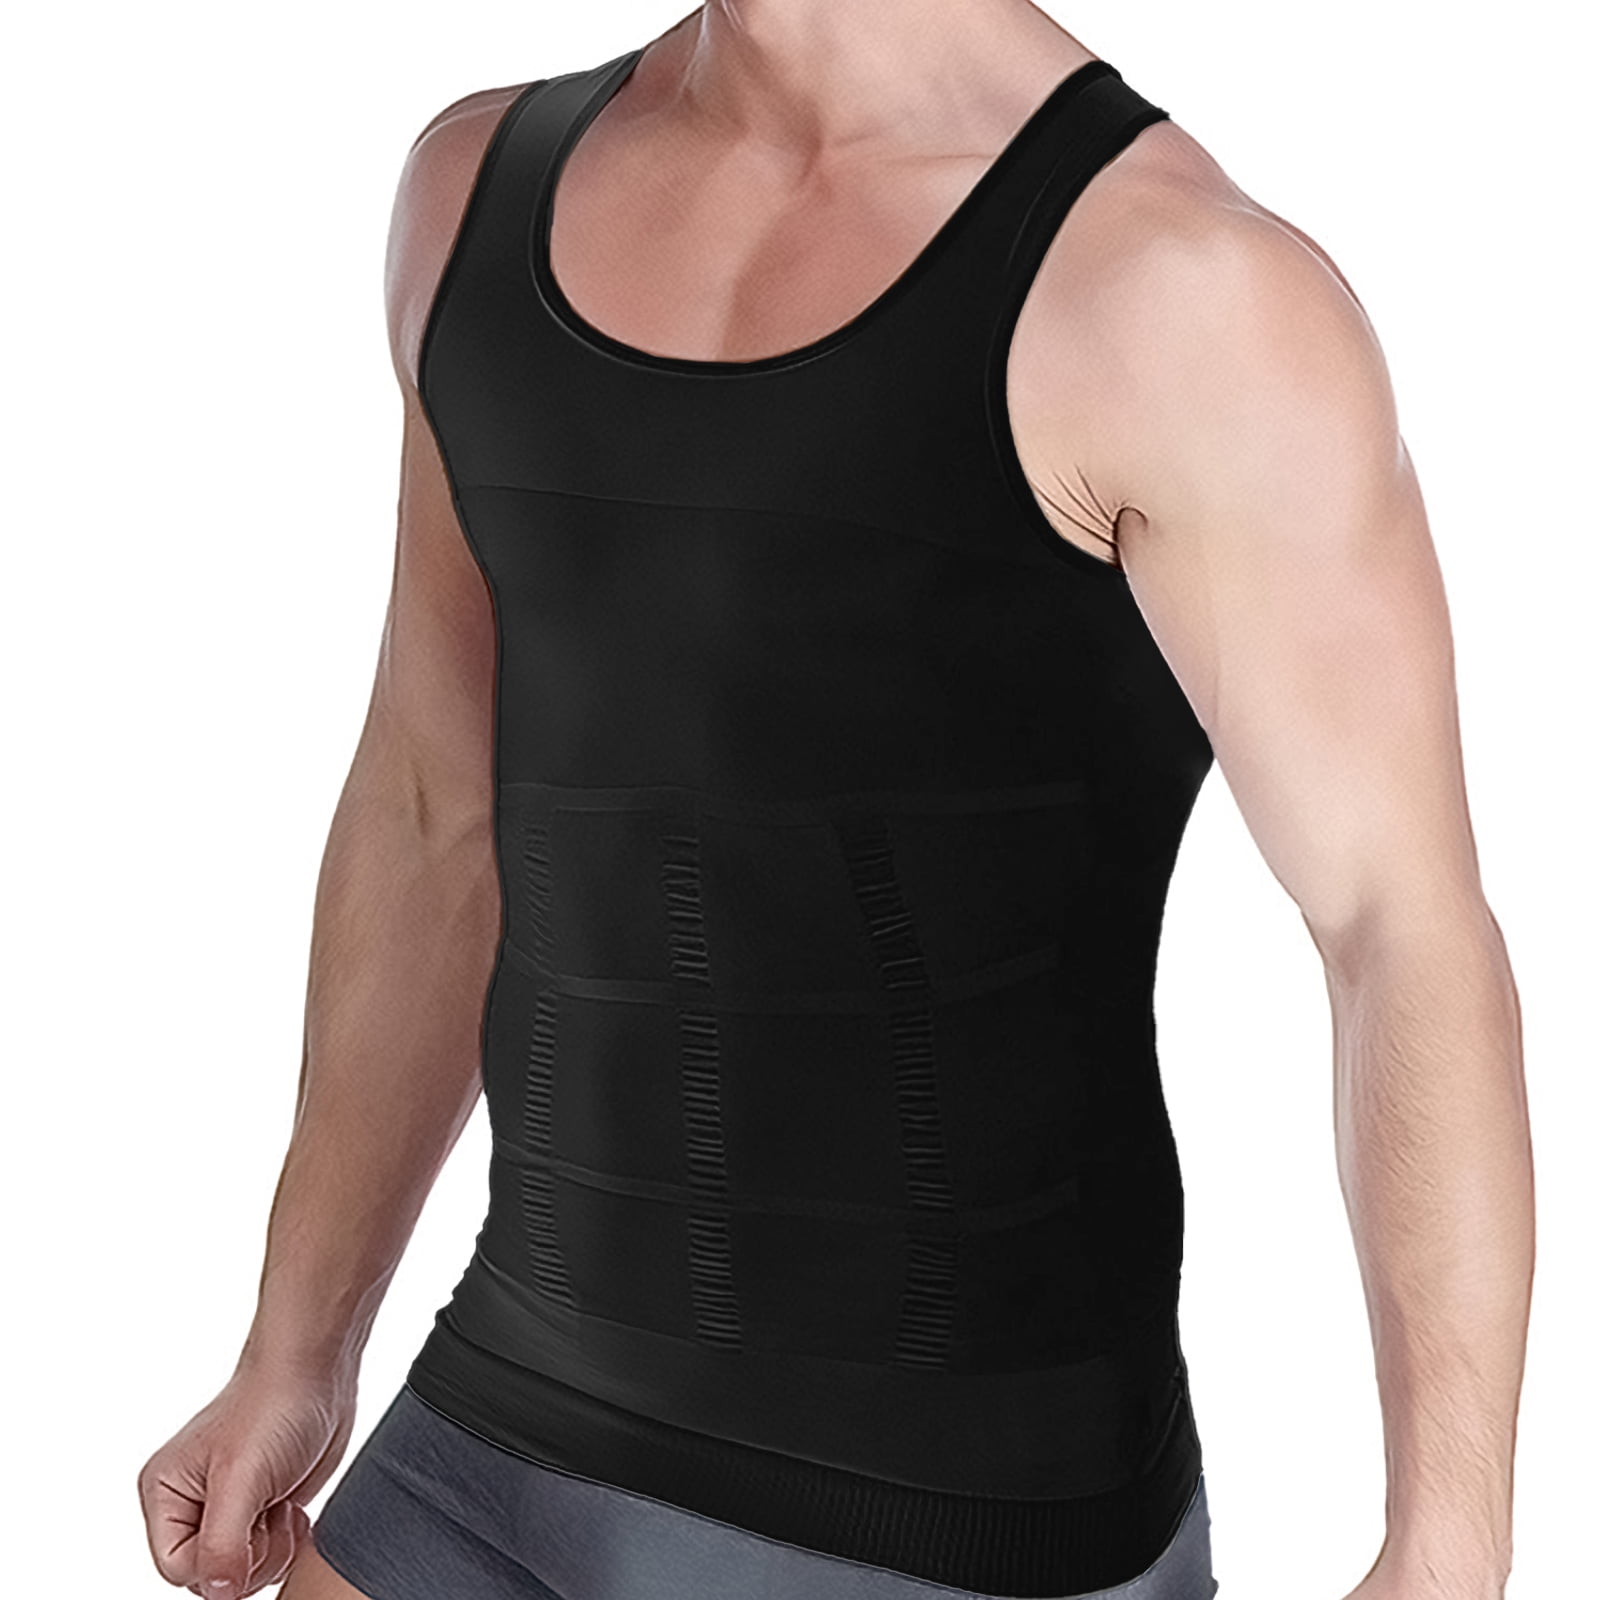 Shaxea Mens Seamless Compression Shirt Gynecomastia Undershirt Tank Top Body Slimmer Shapewear with Tummy Control 